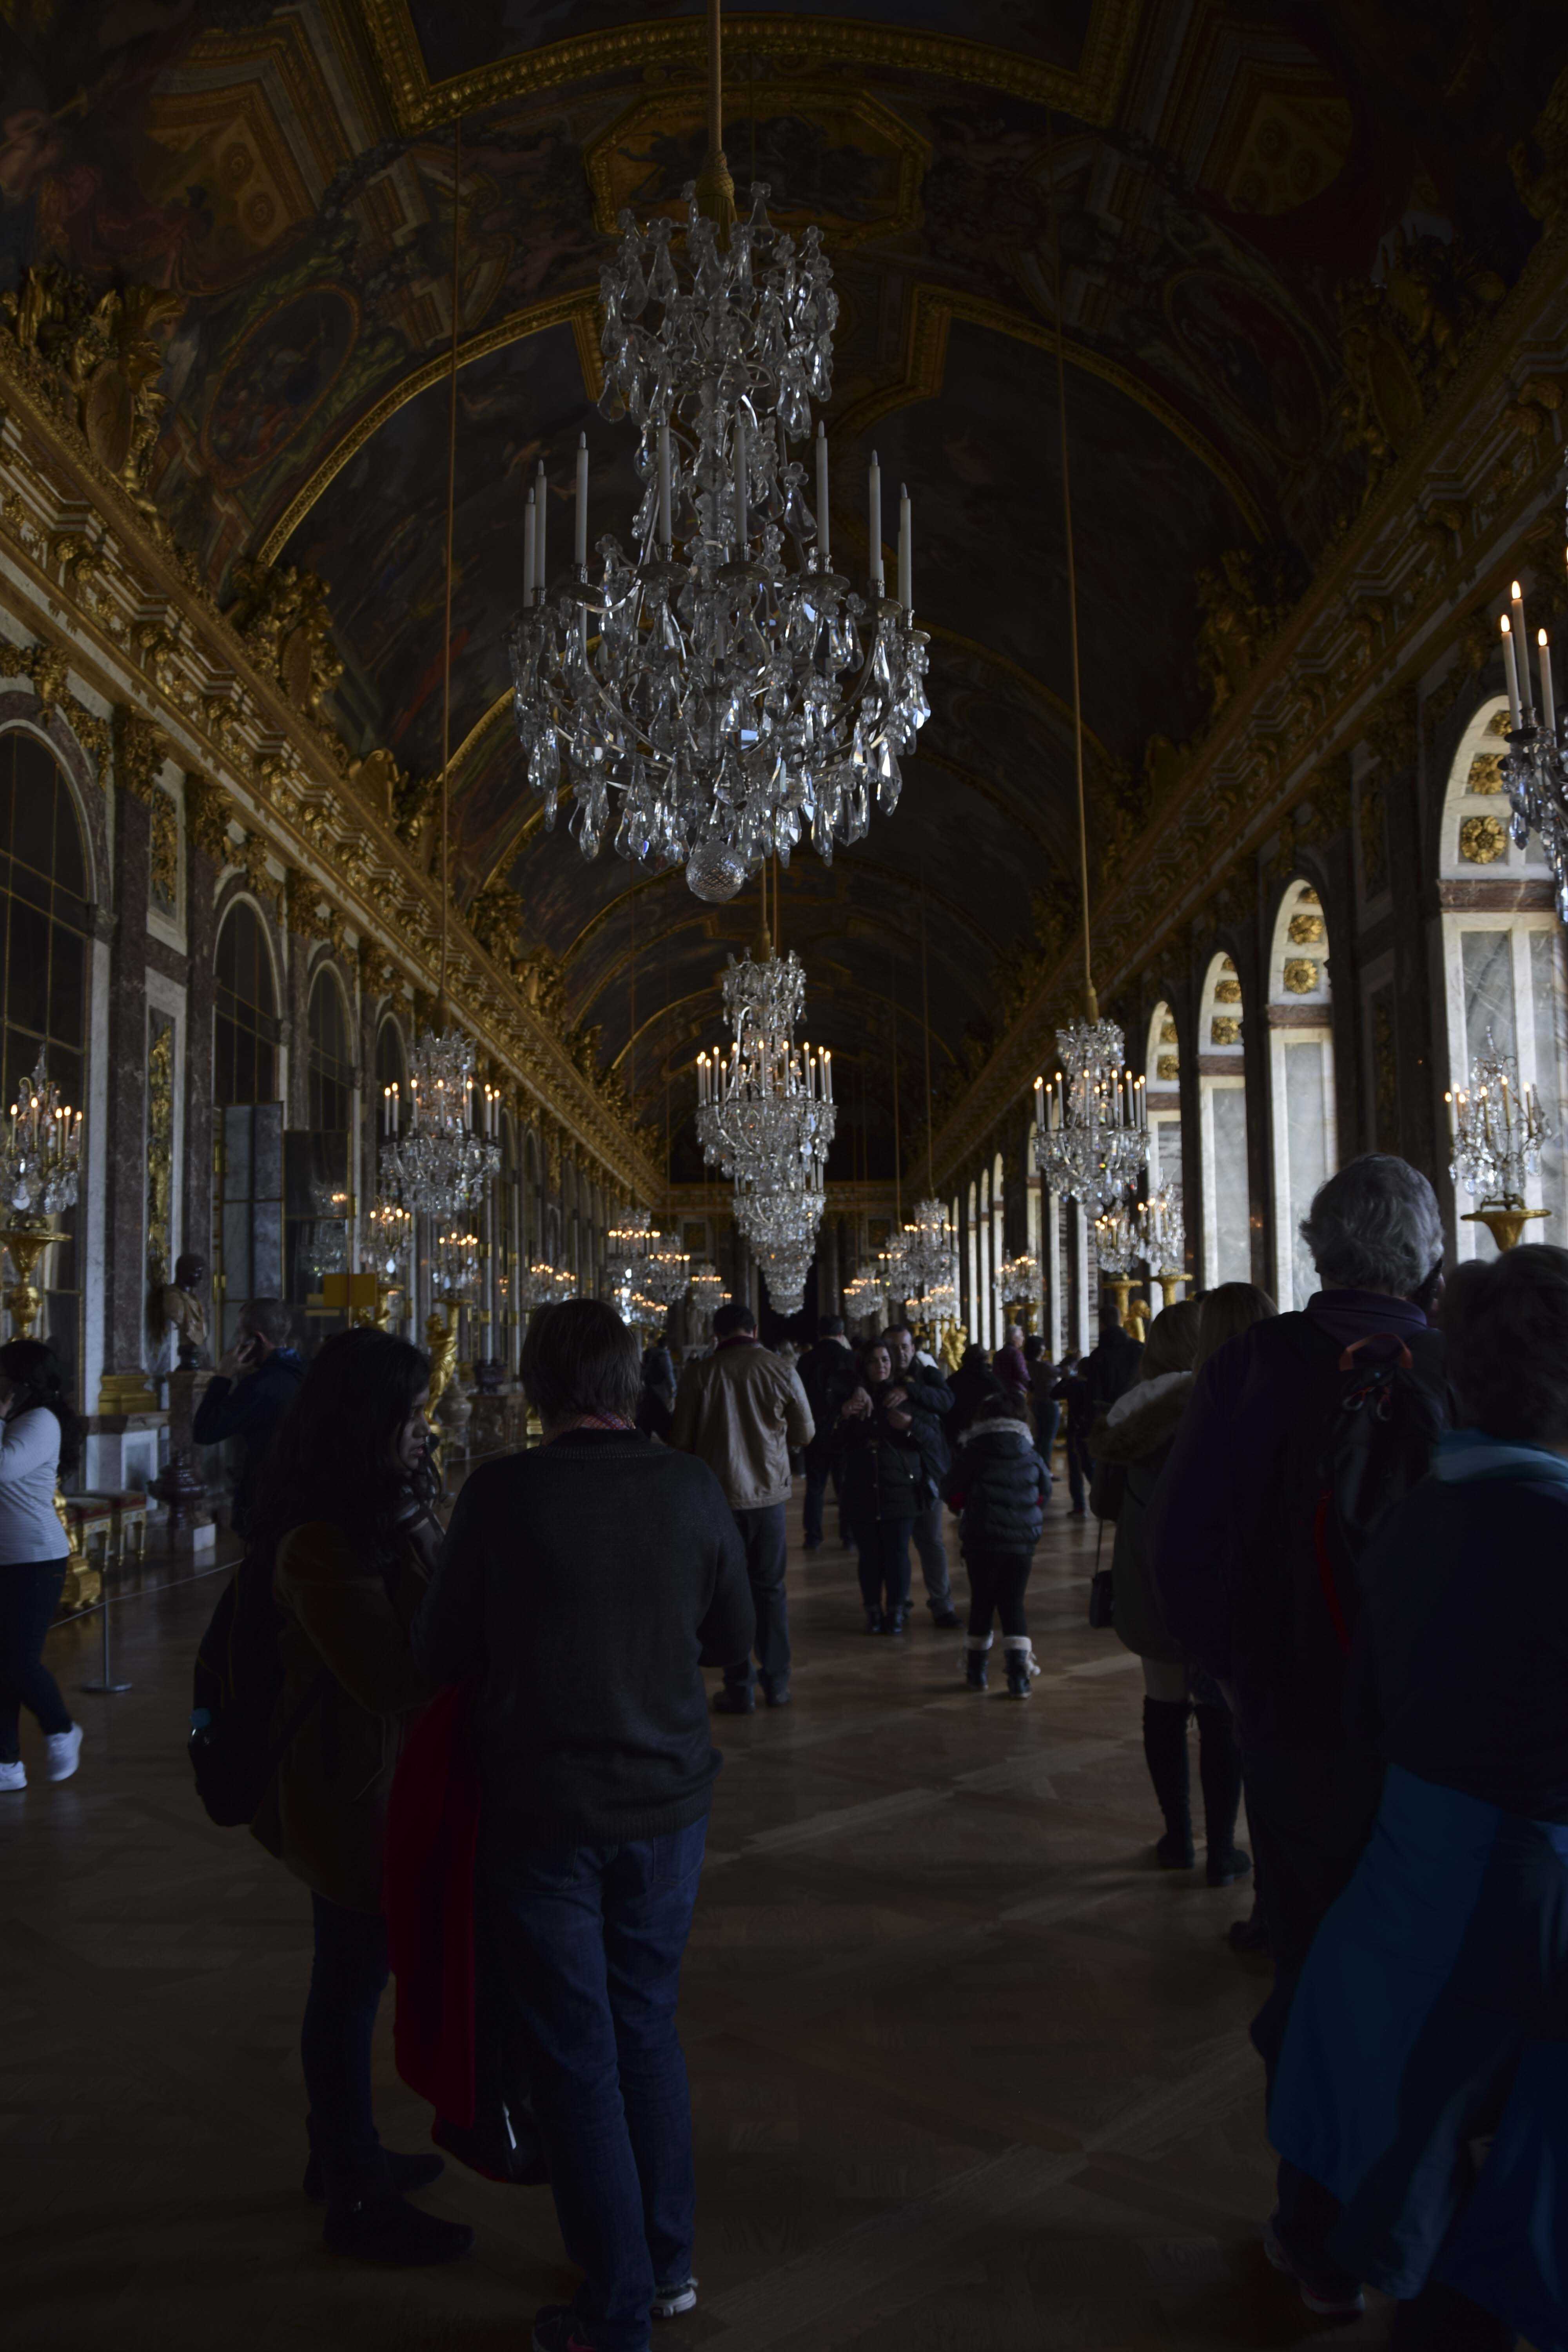 Paris%3A+The+Palace+of+Versailles+Is+a+Dream%2C+No+Matter+How+Touristy